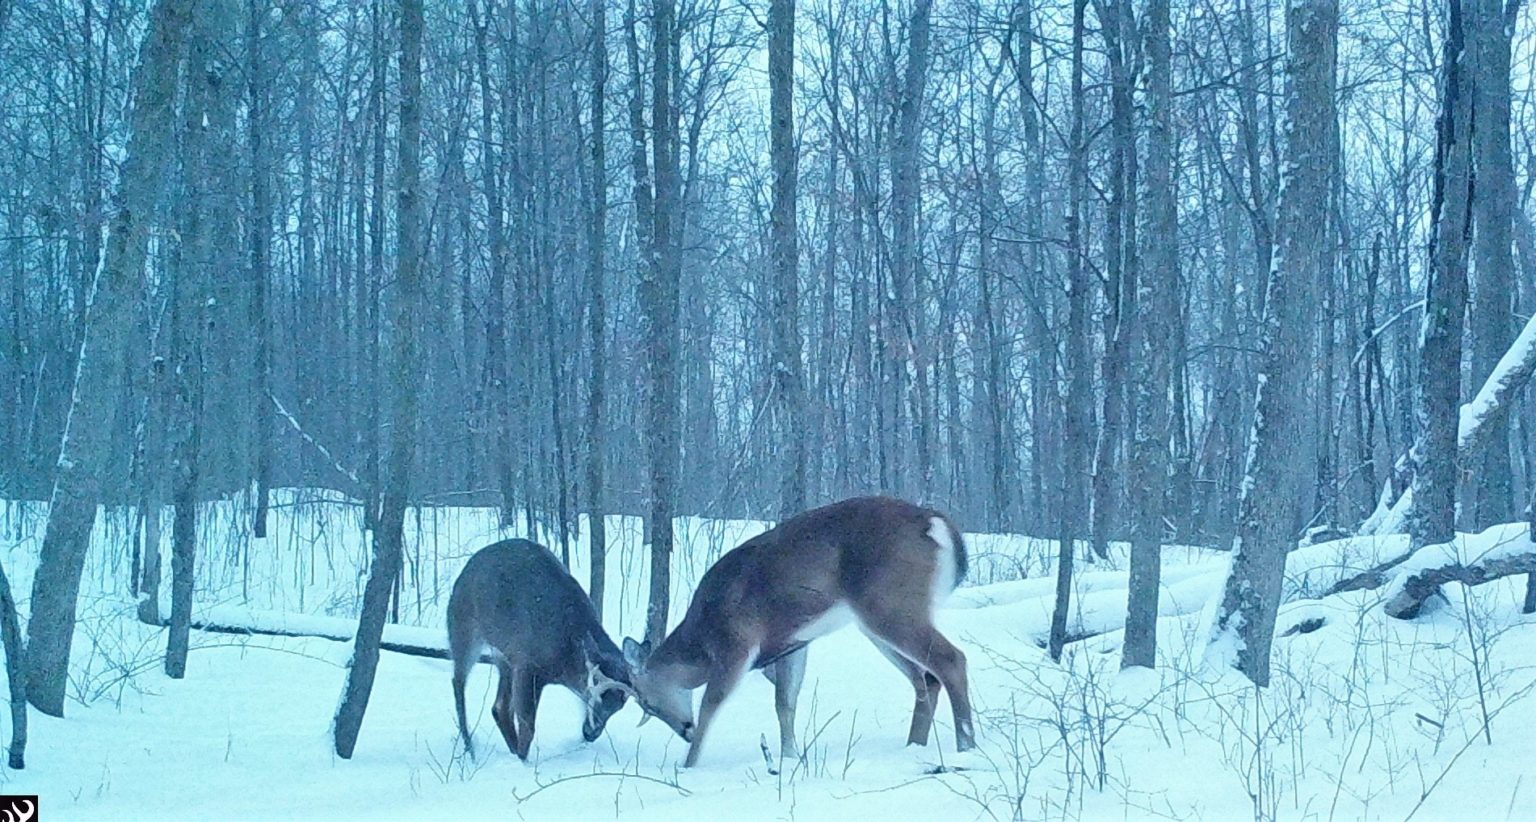 Bucks fight in the snow